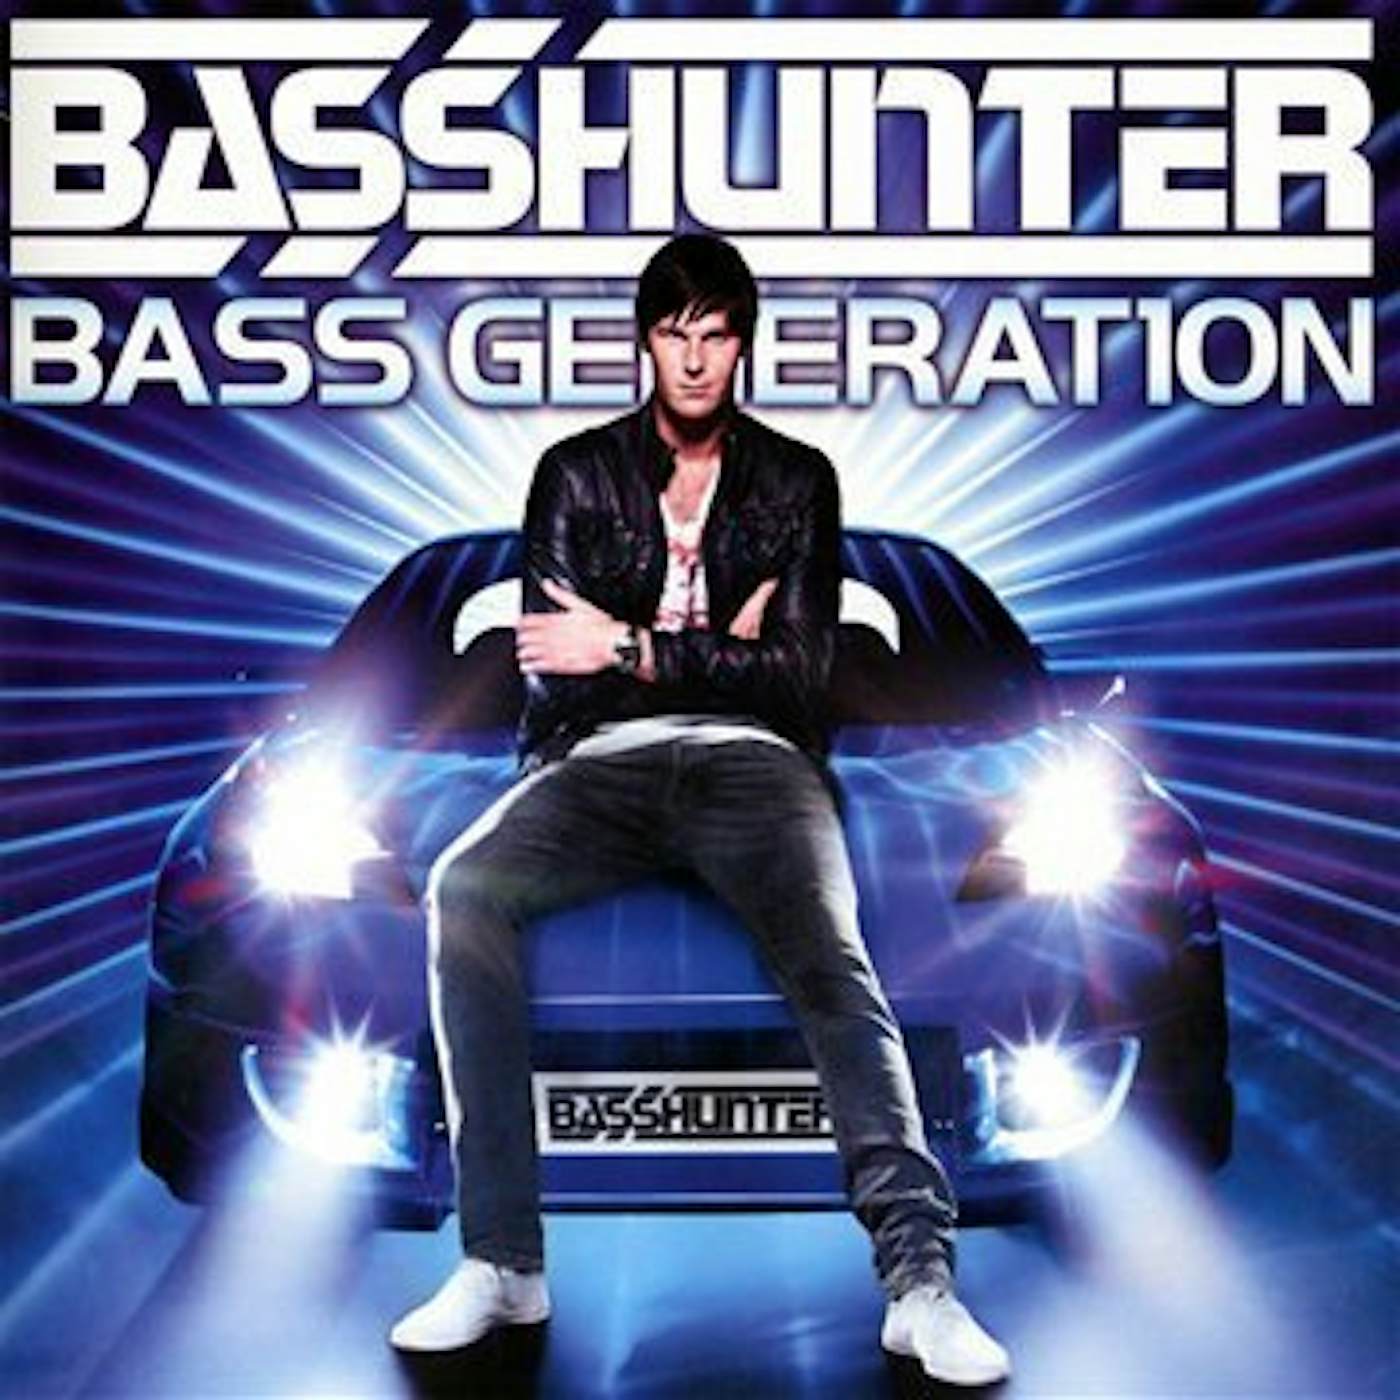 Basshunter BASS GENERATION CD